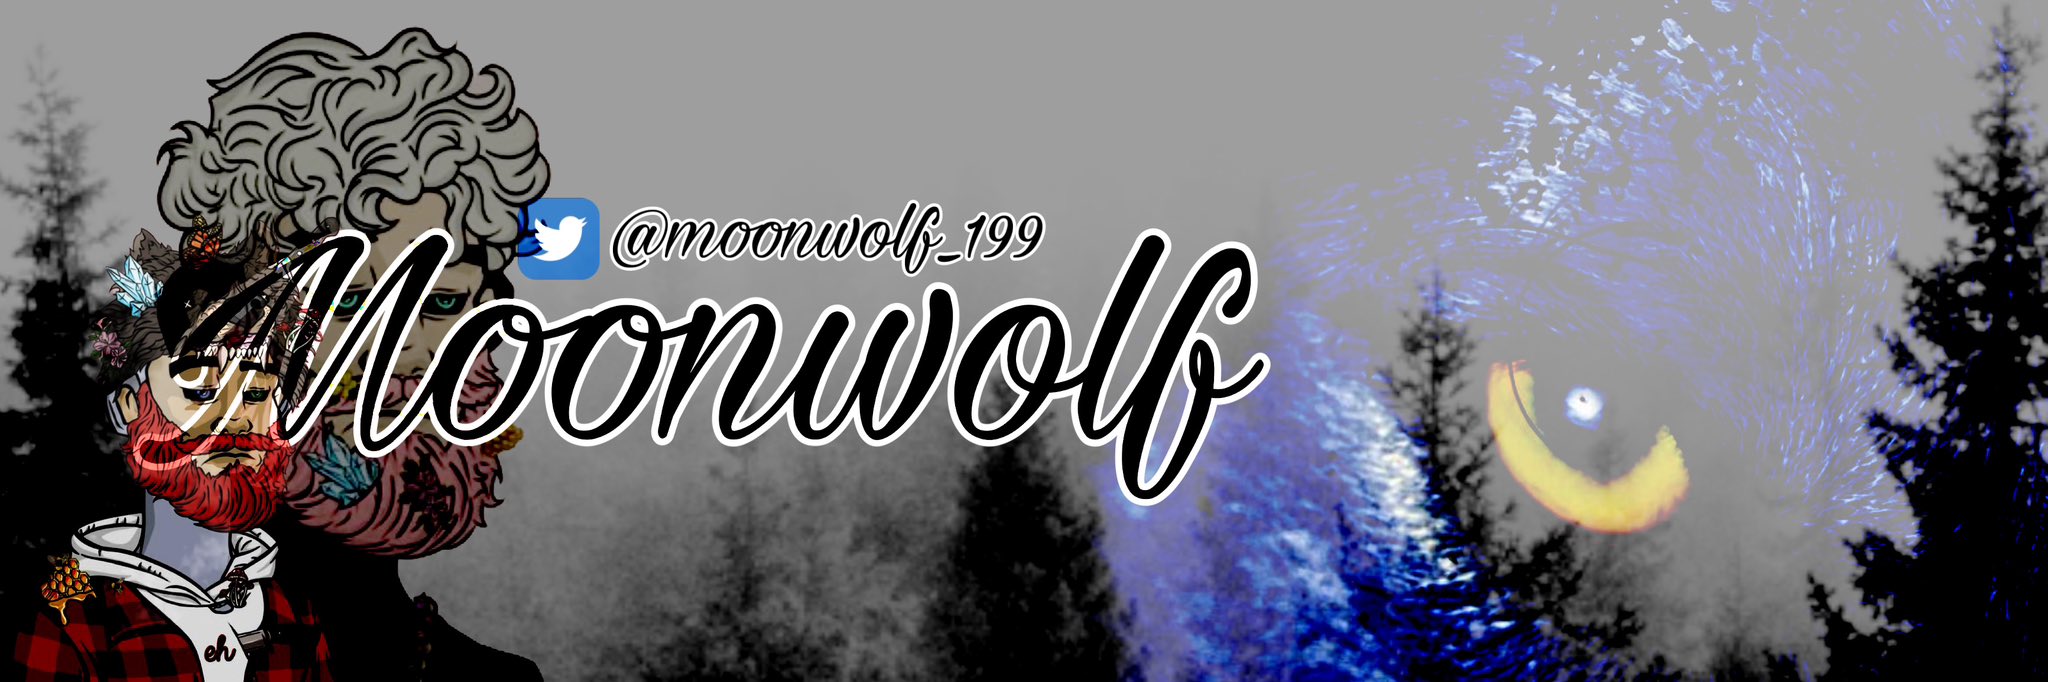 Moonwolf3 banner